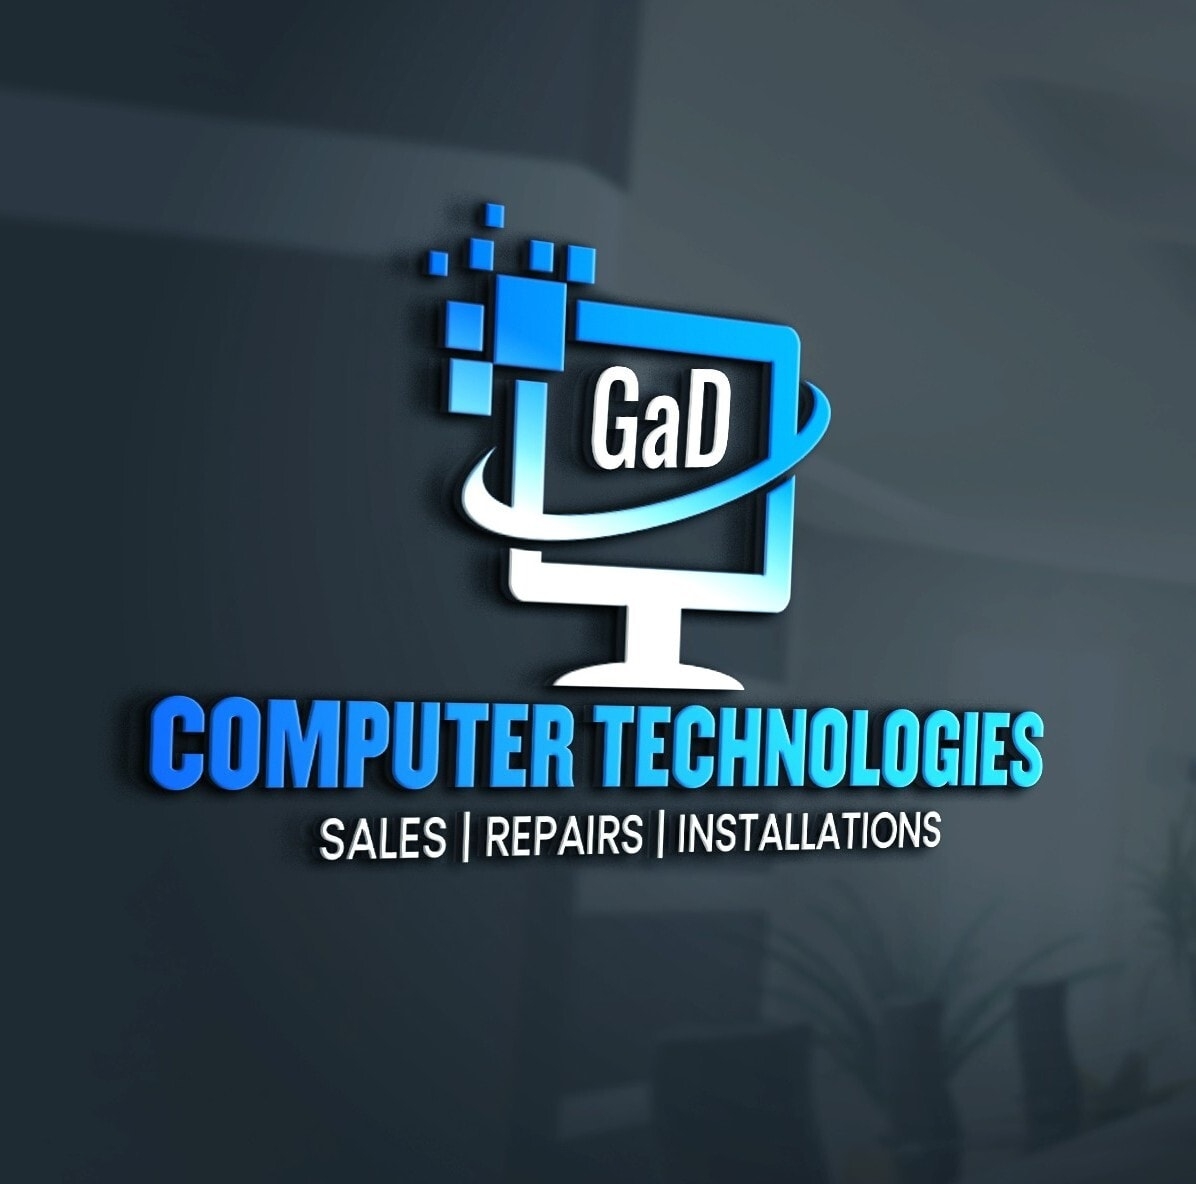 GaD Computers Technologies provider